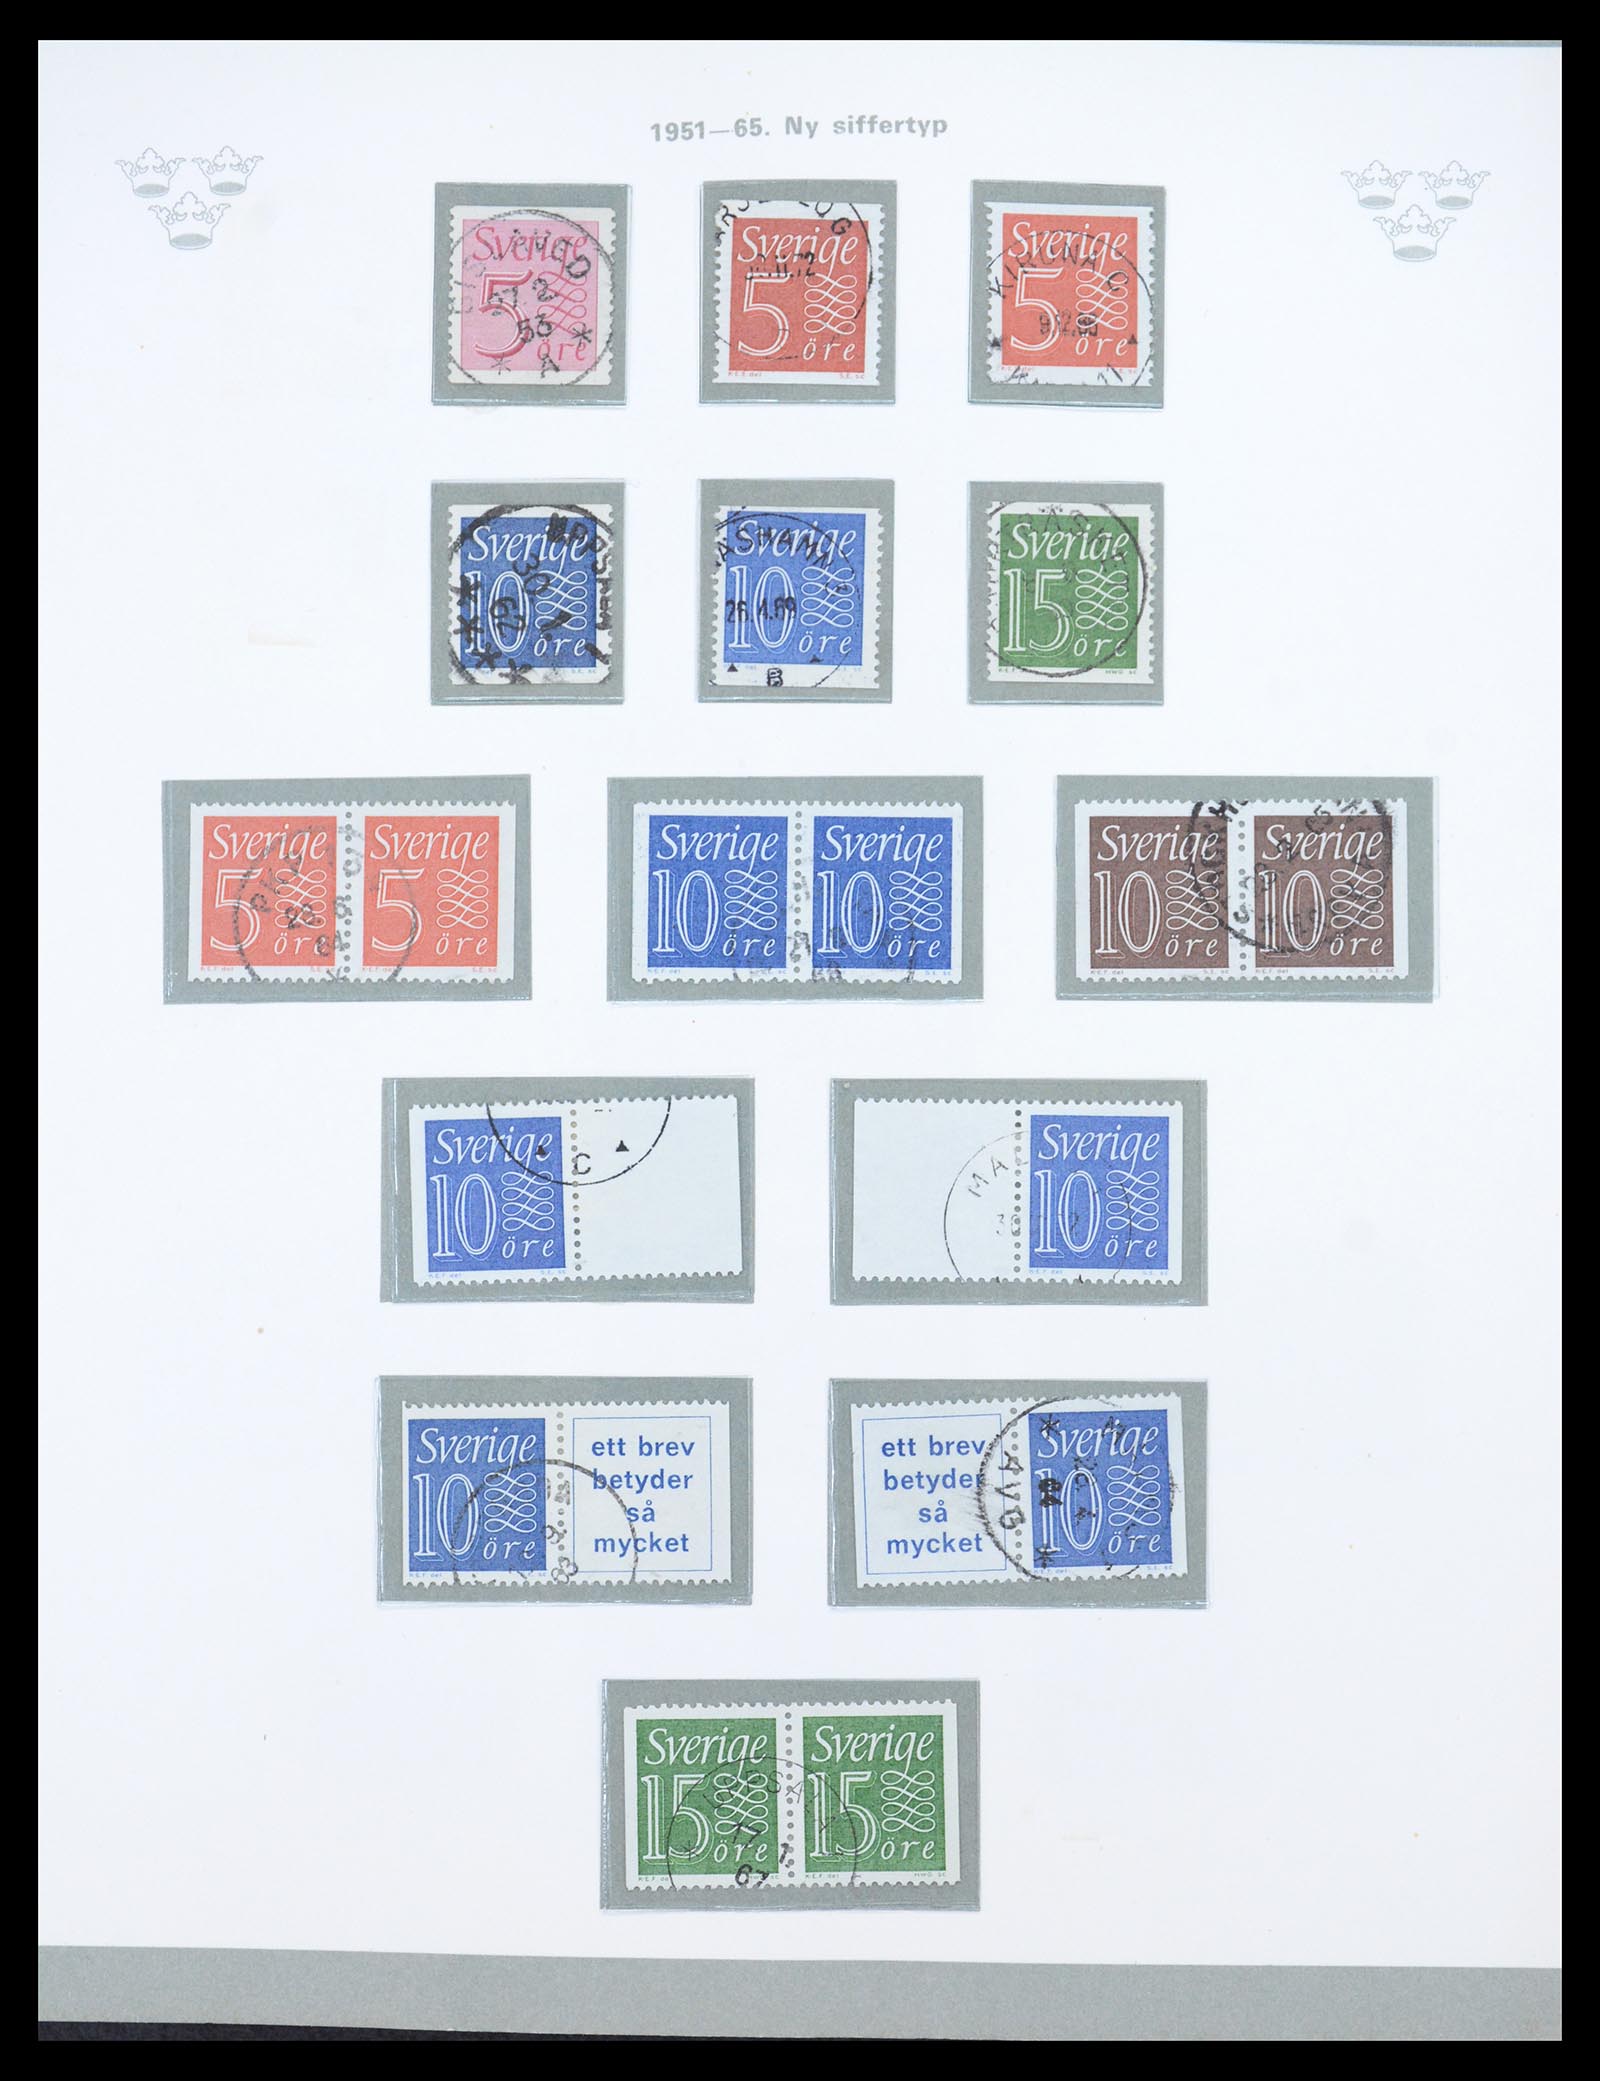 36579 028 - Stamp collection 36579 Zweden complete verzameling 1855-1975.